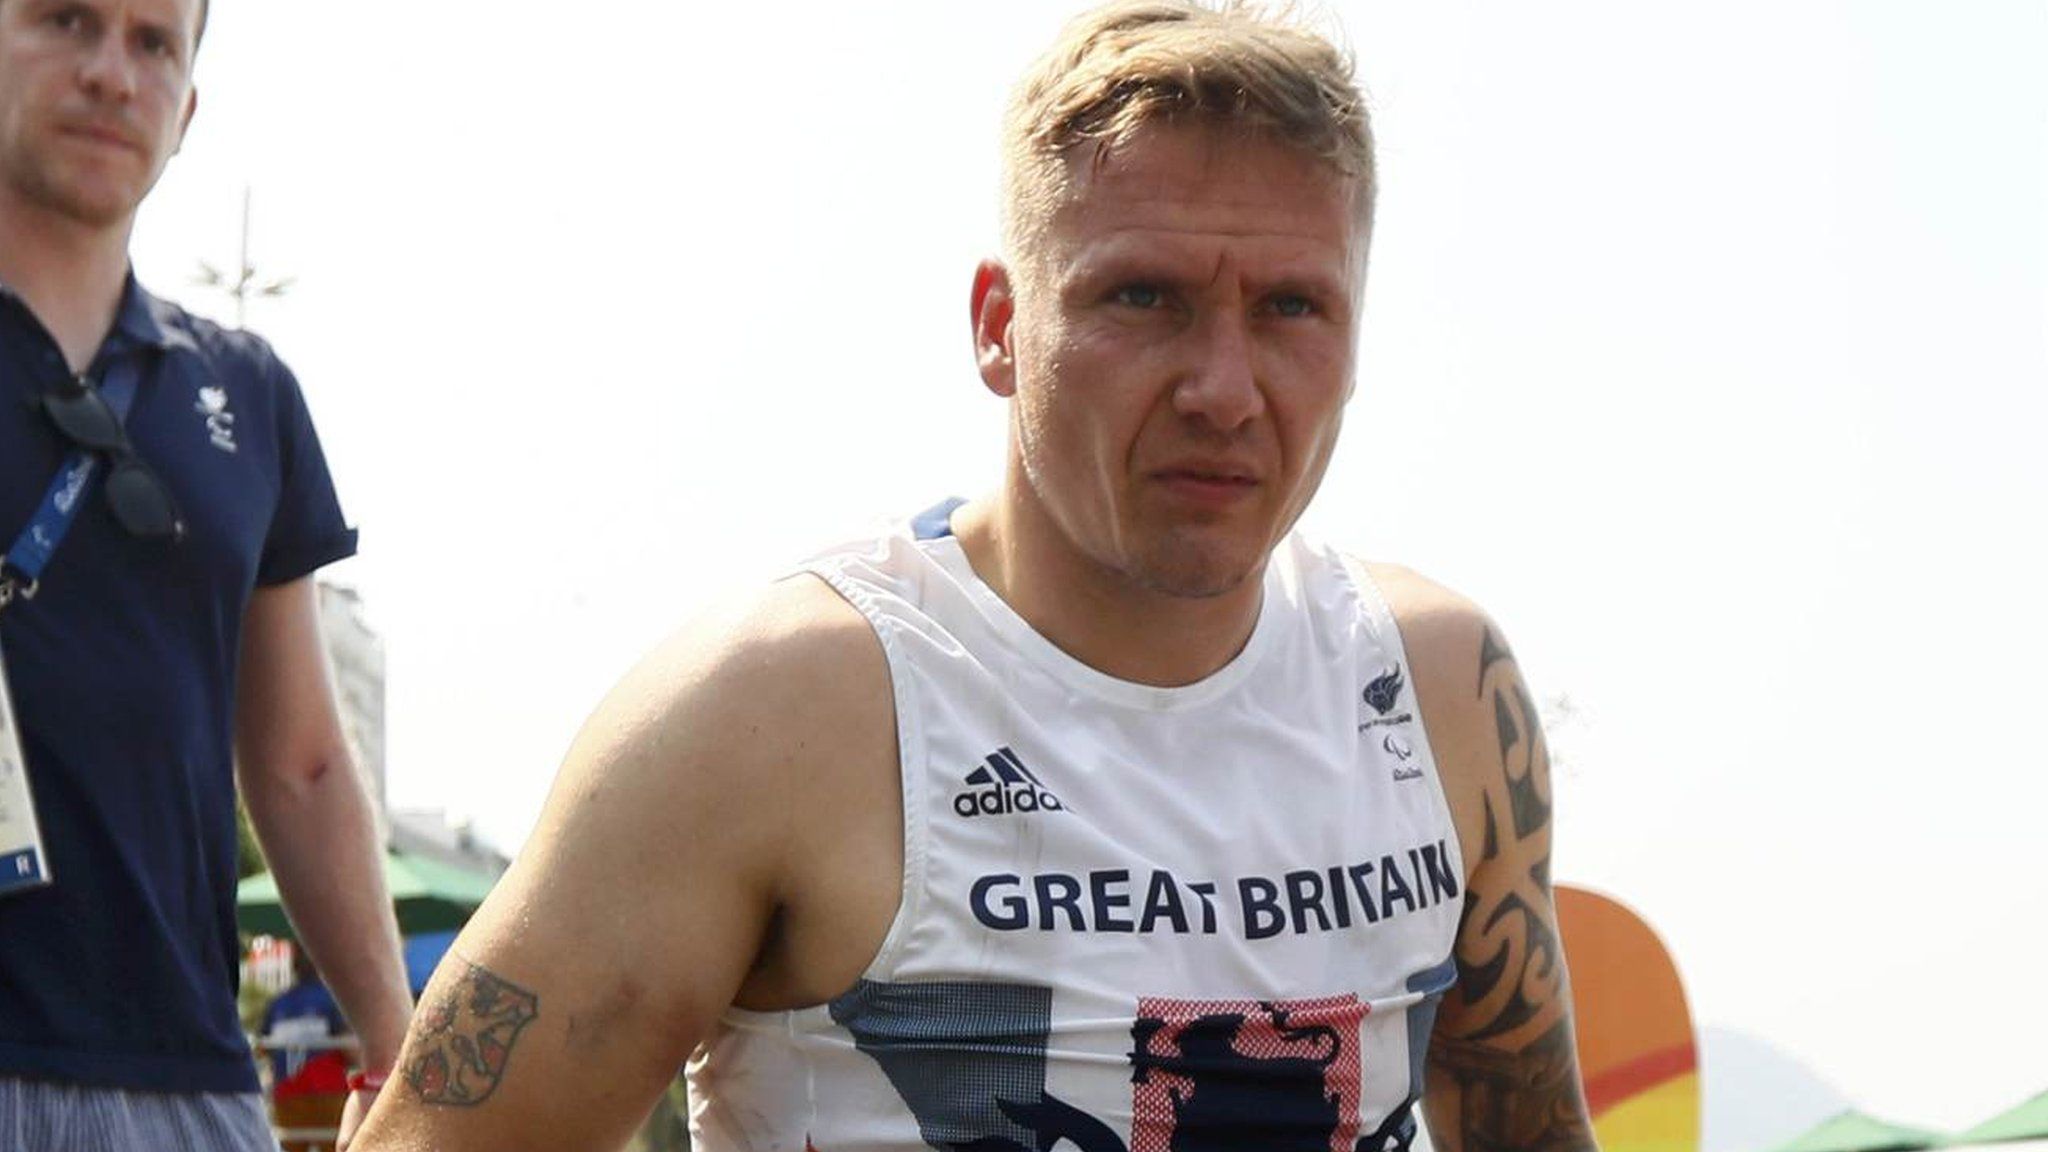 David Weir failed to complete the men's T54 marathon on Sunday